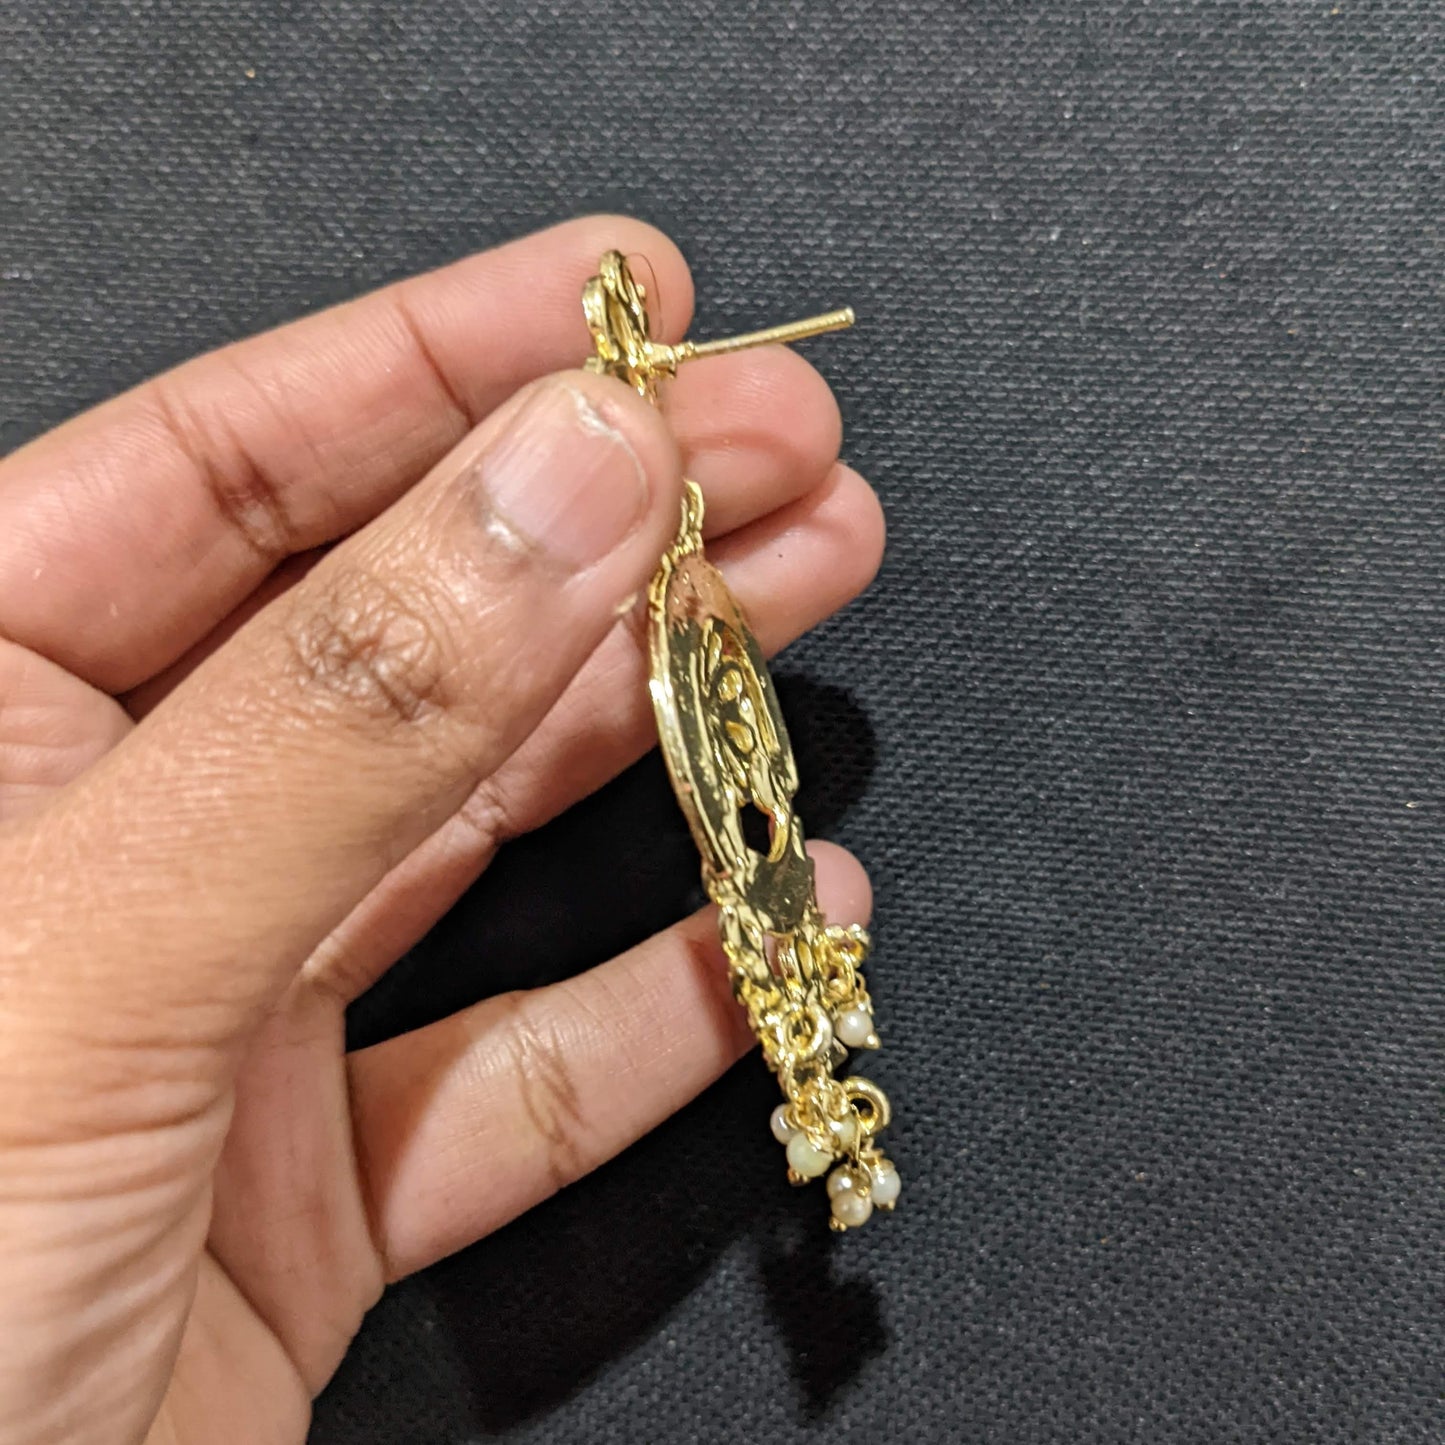 Flower Leaf design Glass Kundan Earrings